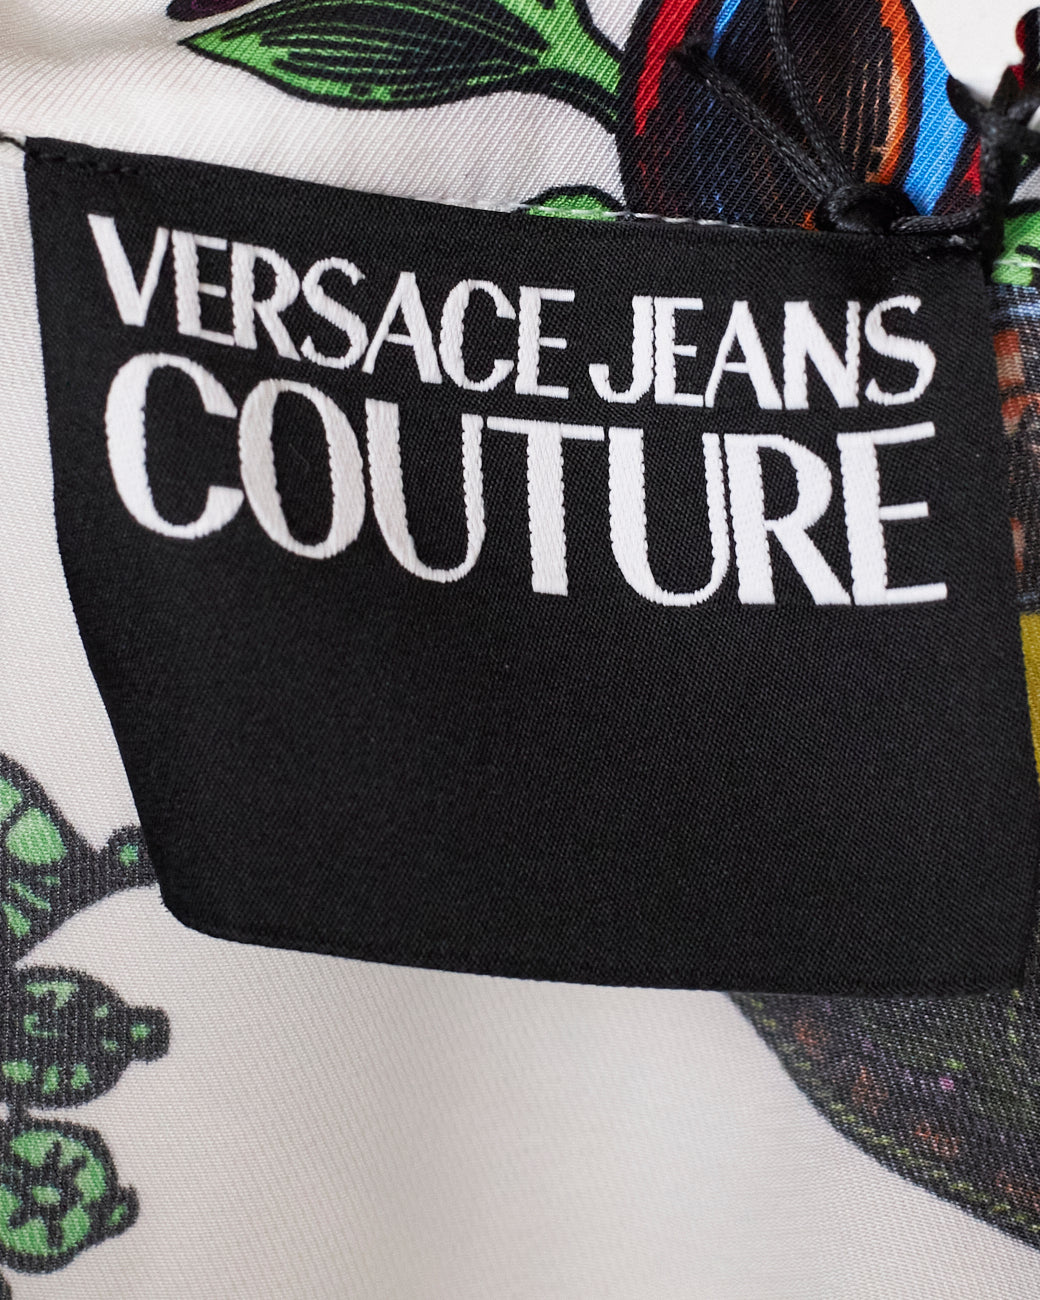 Camisa estampada Versace Jeans Couture